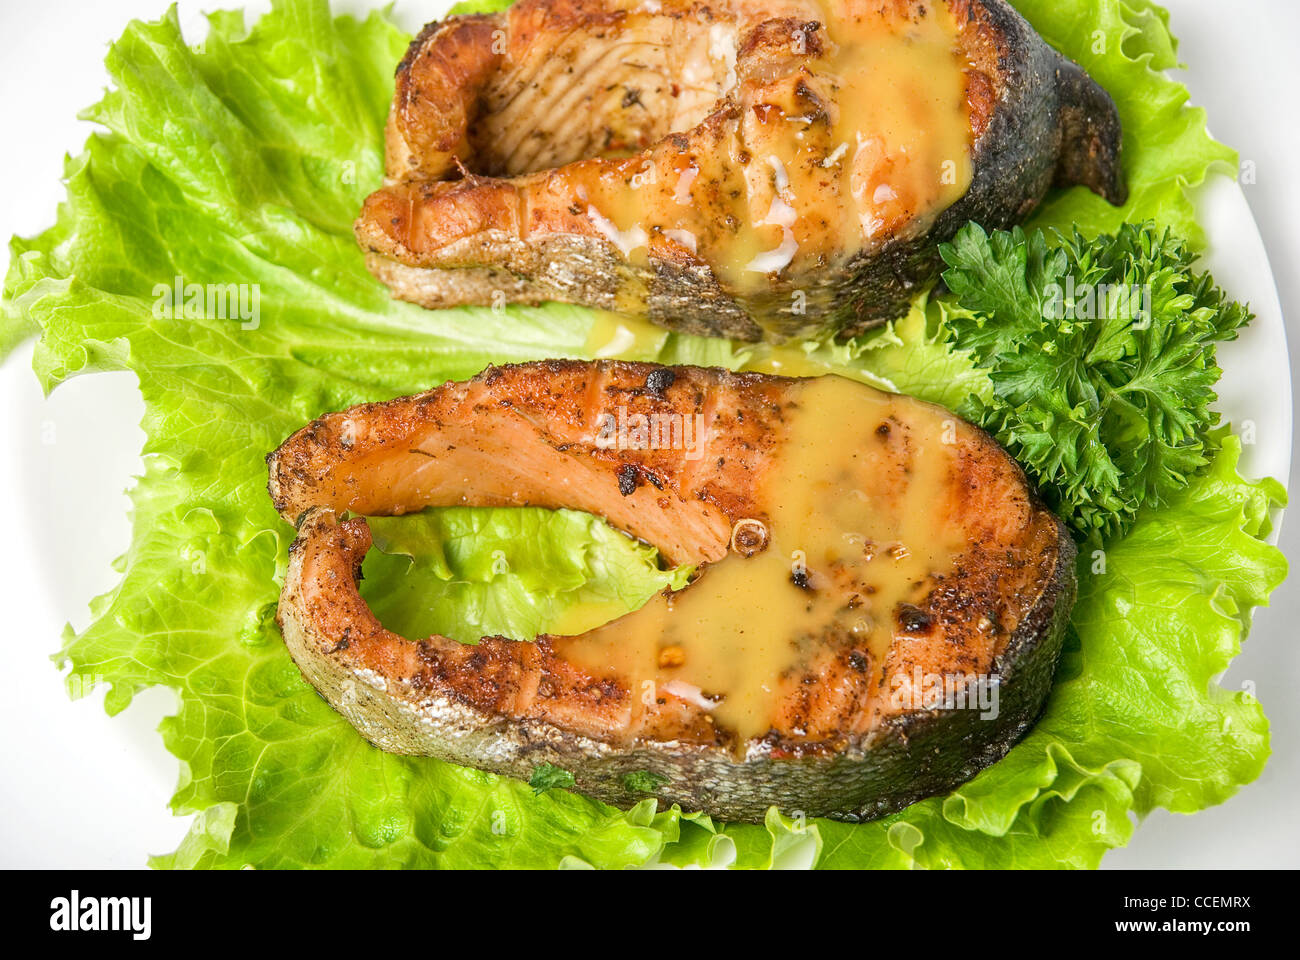 Roasted chum salmon fish dish isolated on a white background Stock